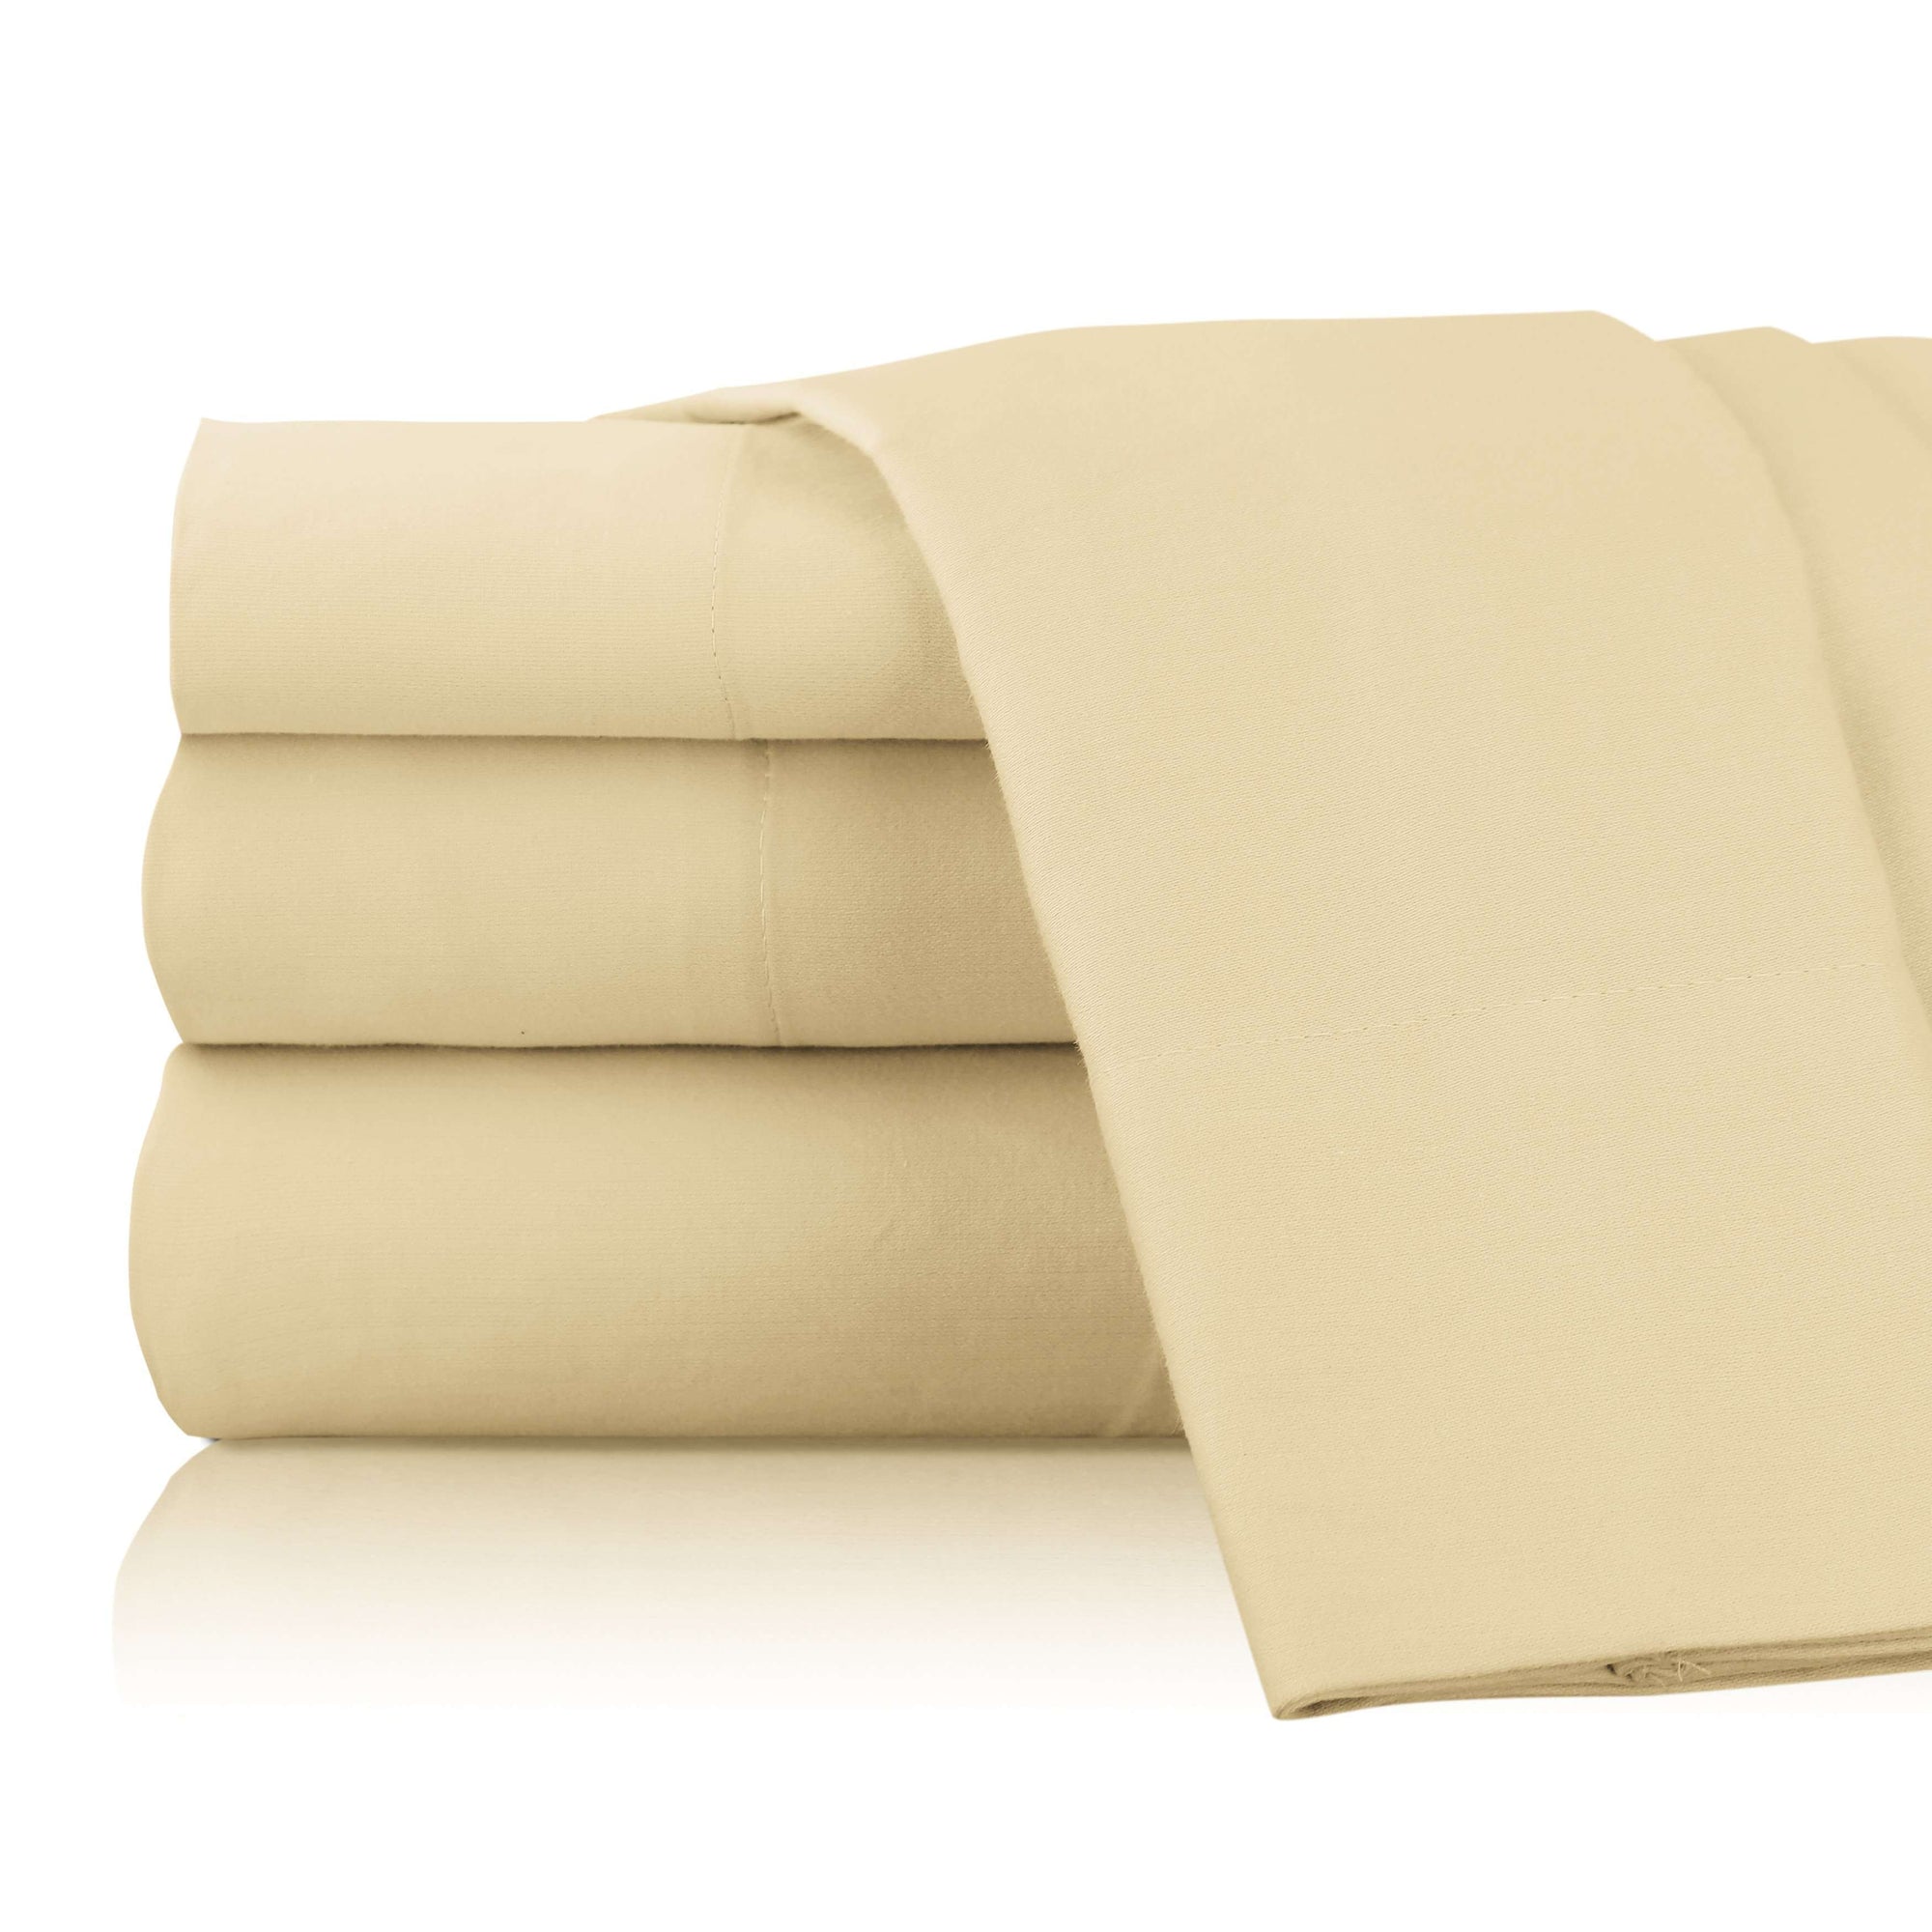 White Sateen Linen Set  Shop 600 Thread Count Cotton Hotel Sheets